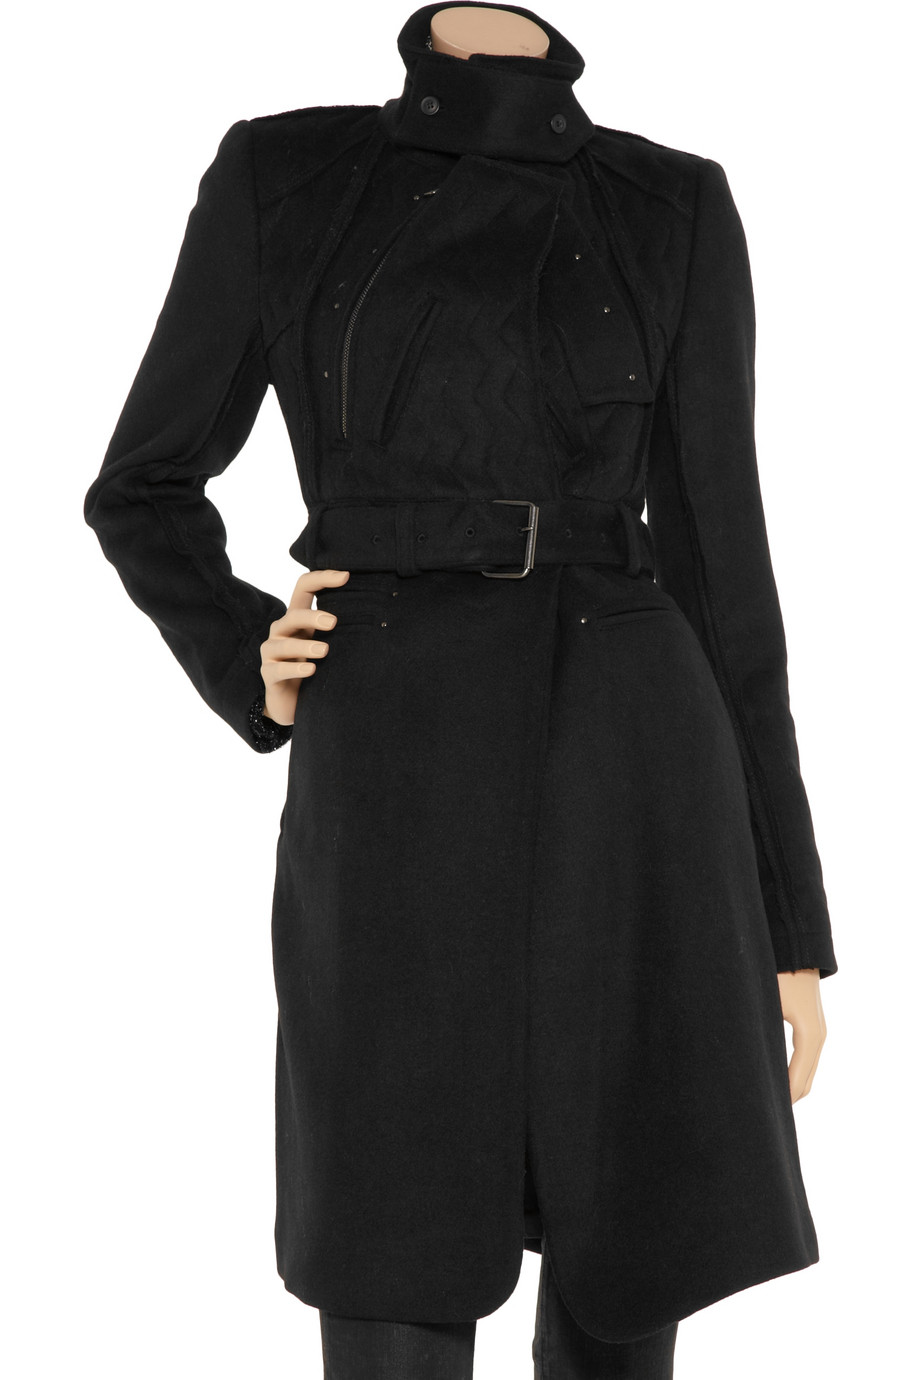 Edun Textured Wool-blend Trench Coat in Black | Lyst